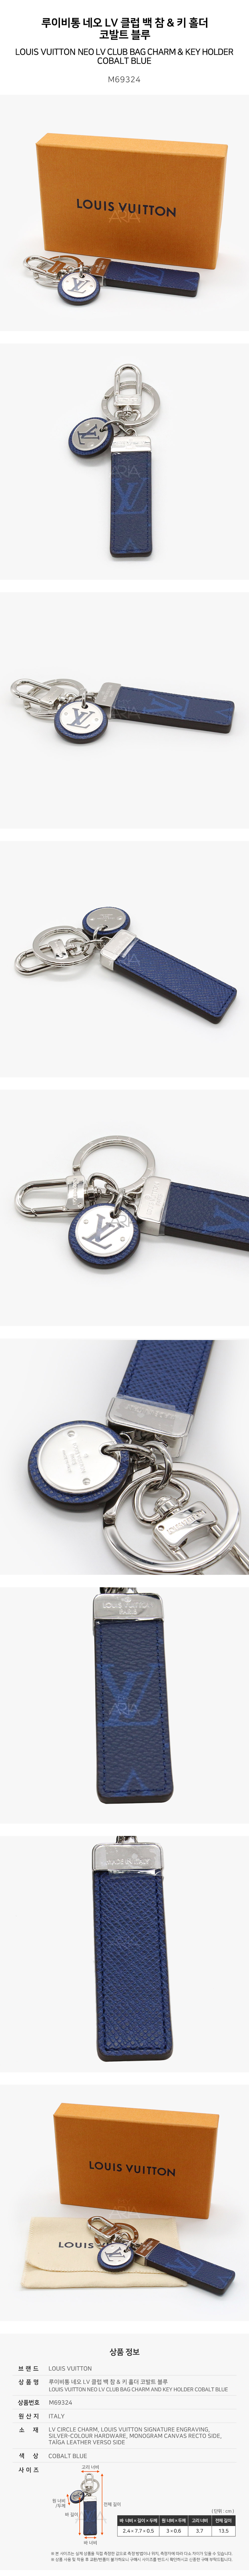 Neo LV Club Bag Charm and Key Holder Cobalt